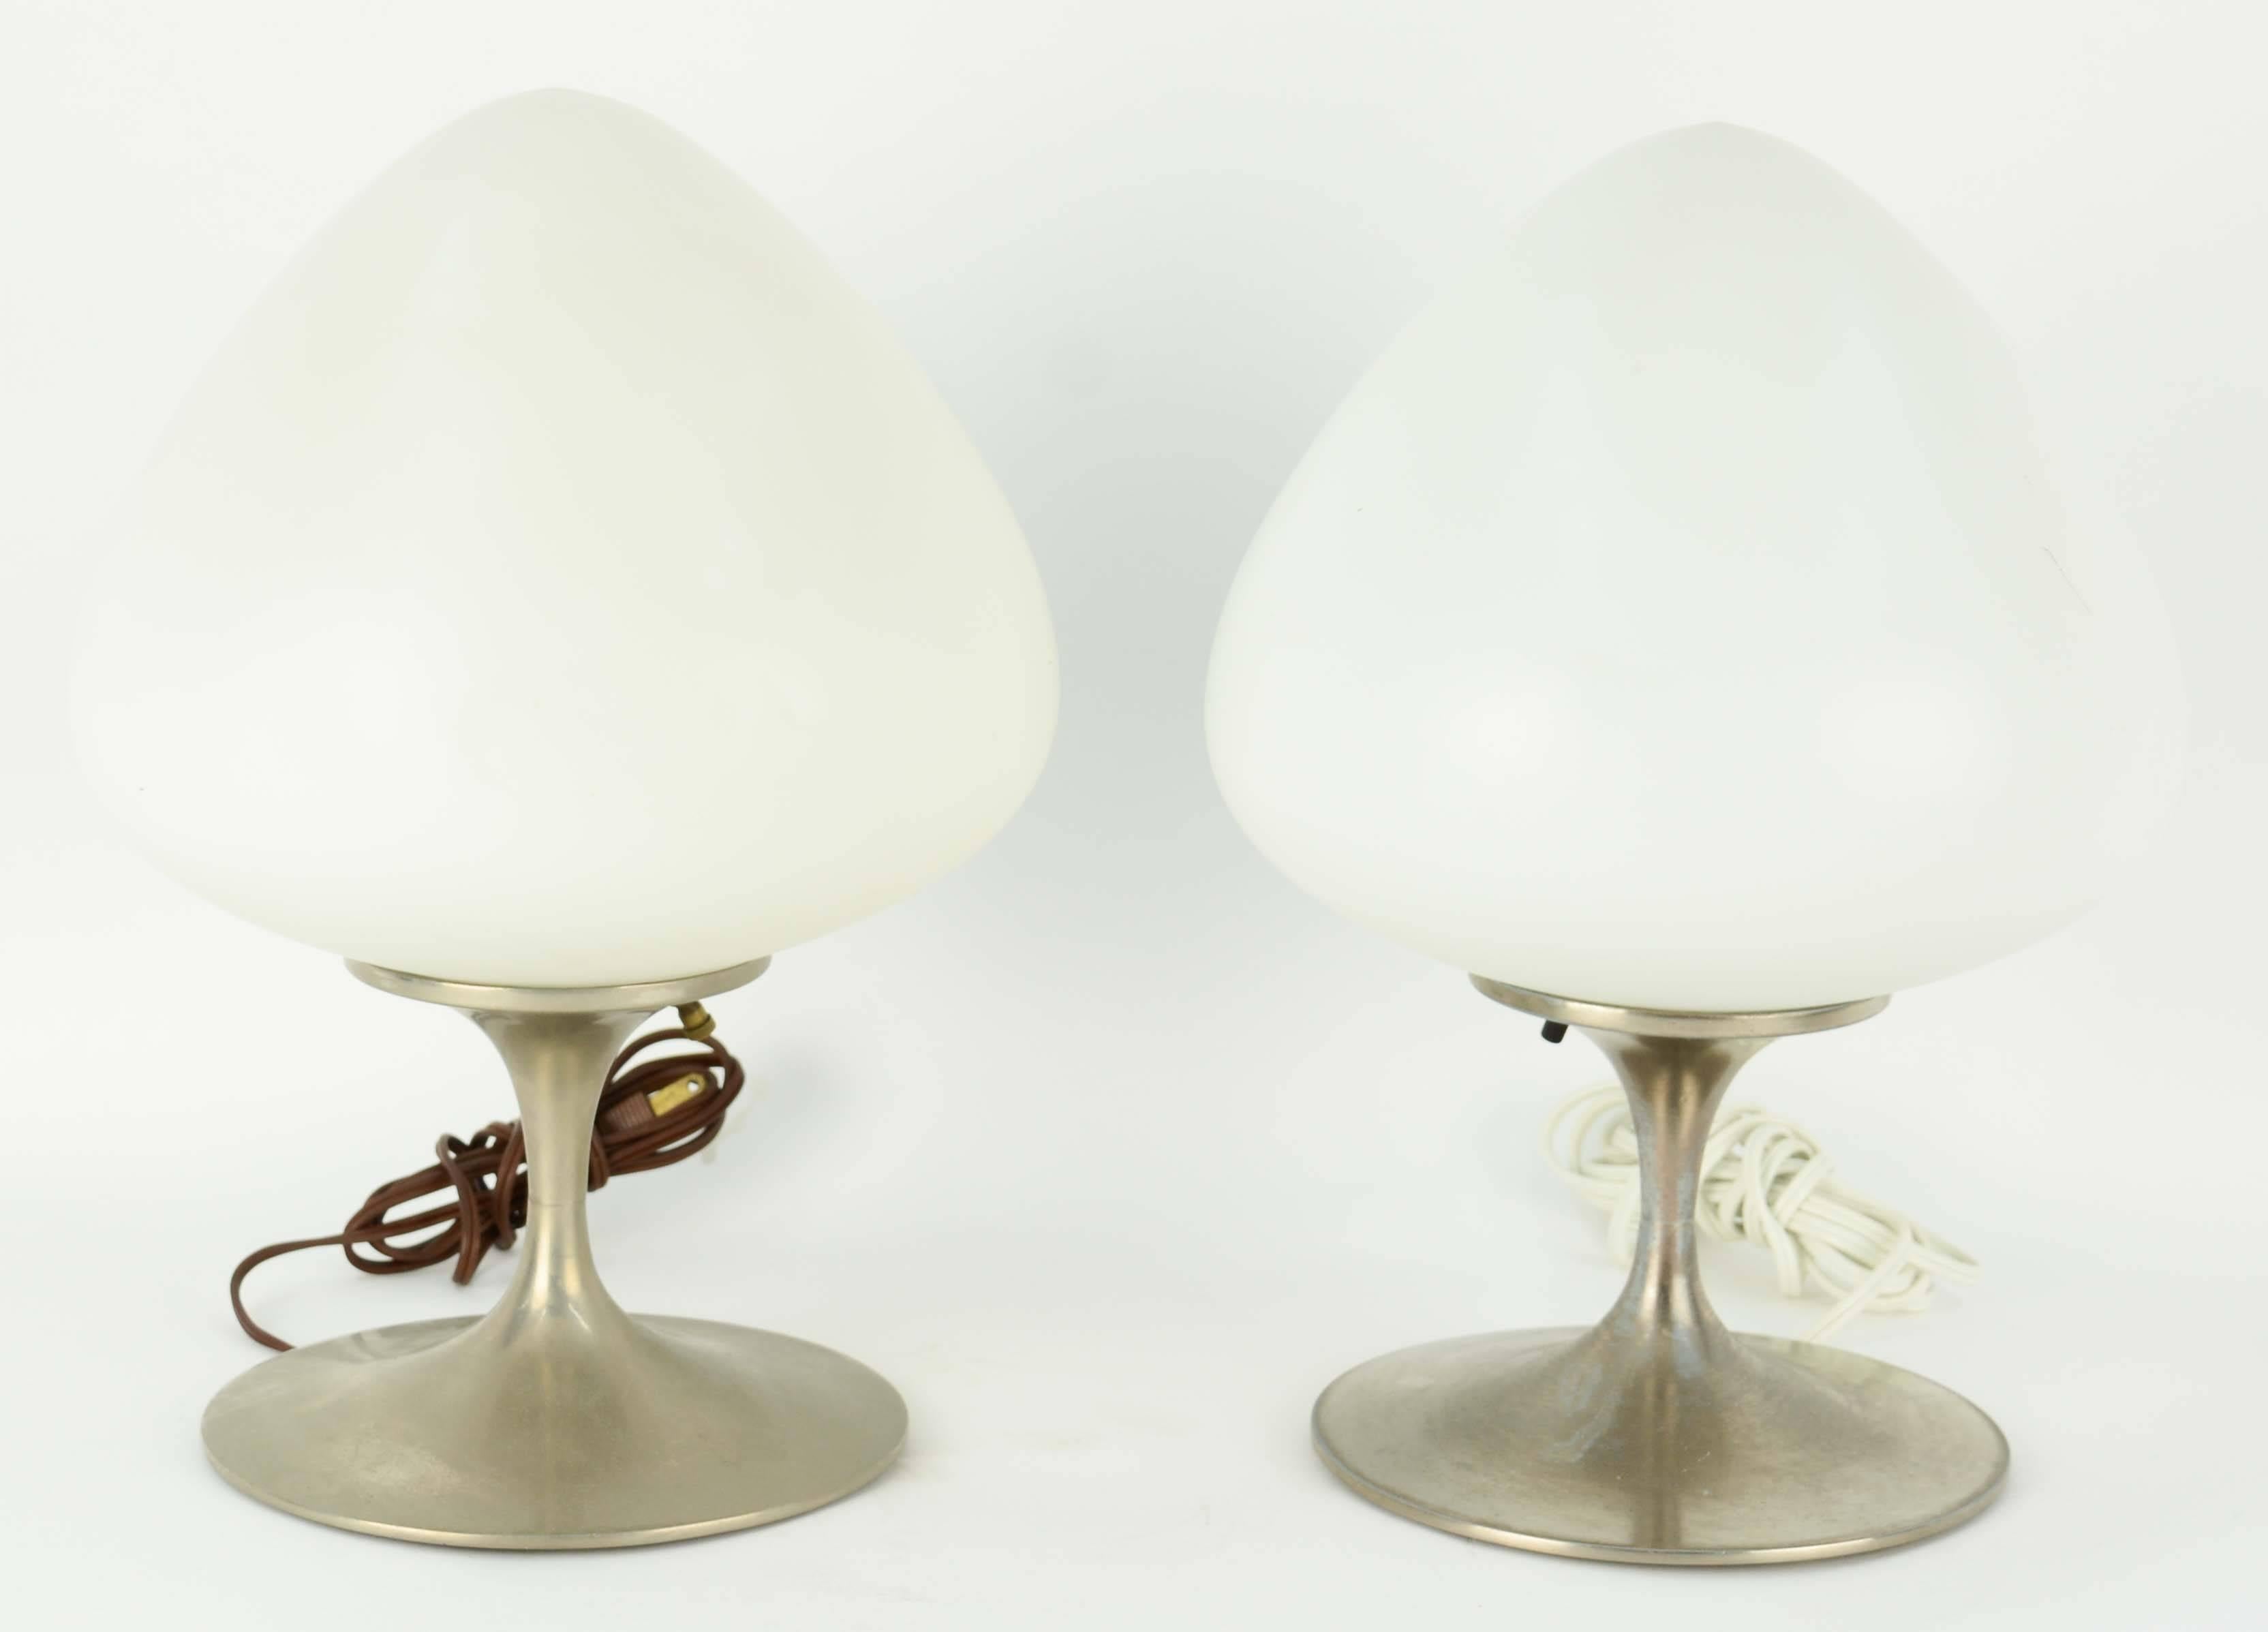 A pair of Bill Curry acorn Laurel lamps in brushed aluminum.